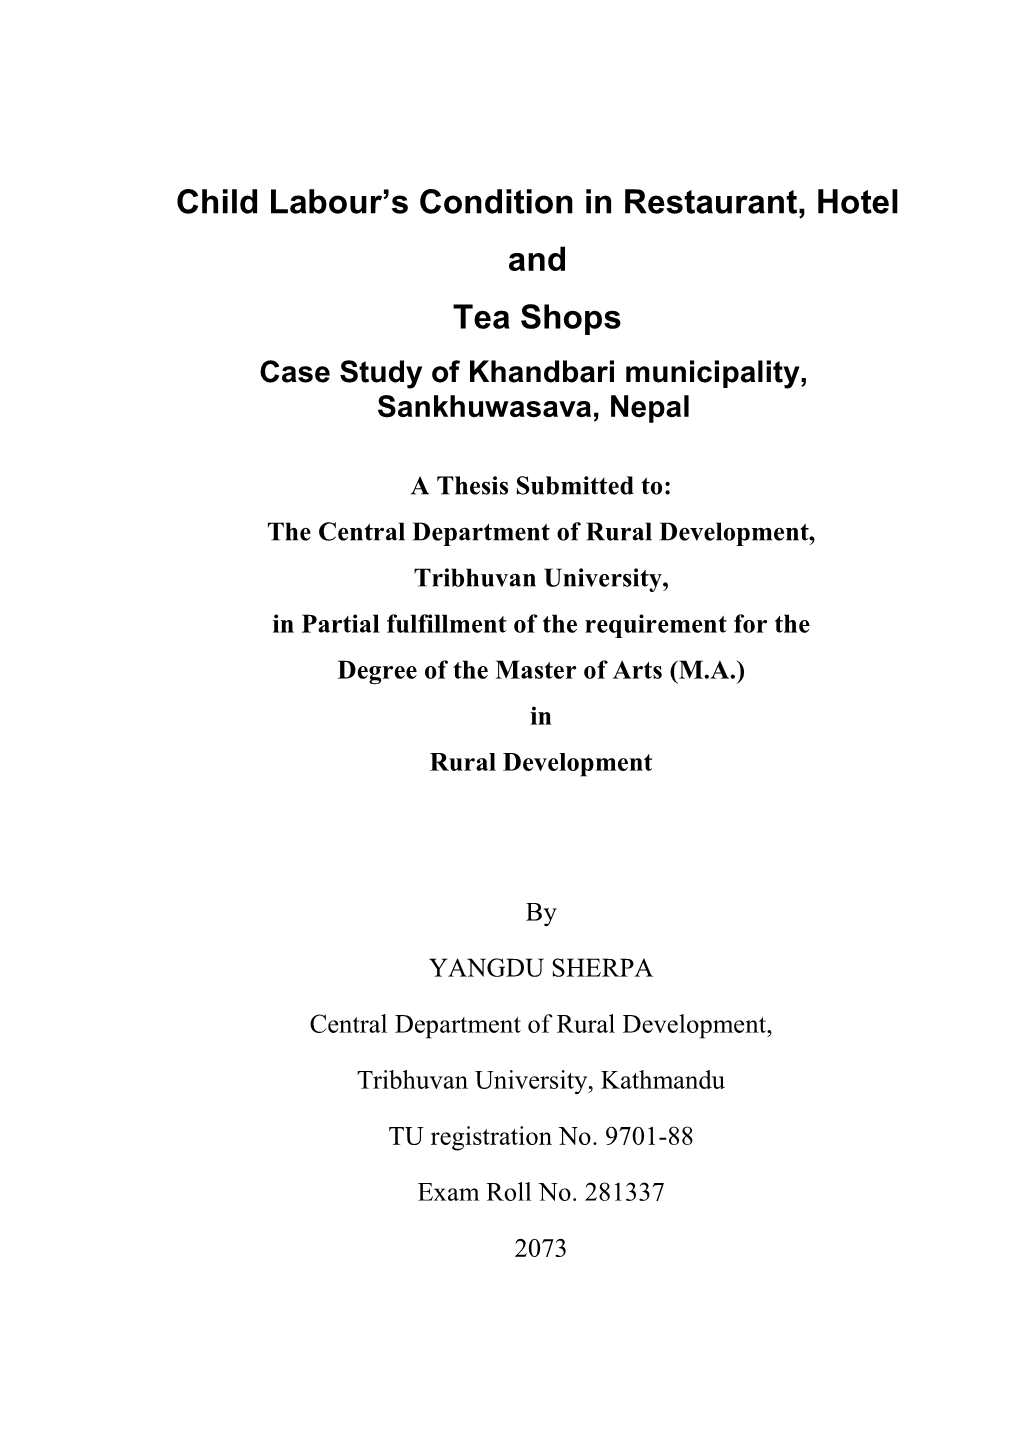 Final Copy of Thesis-Yangdu